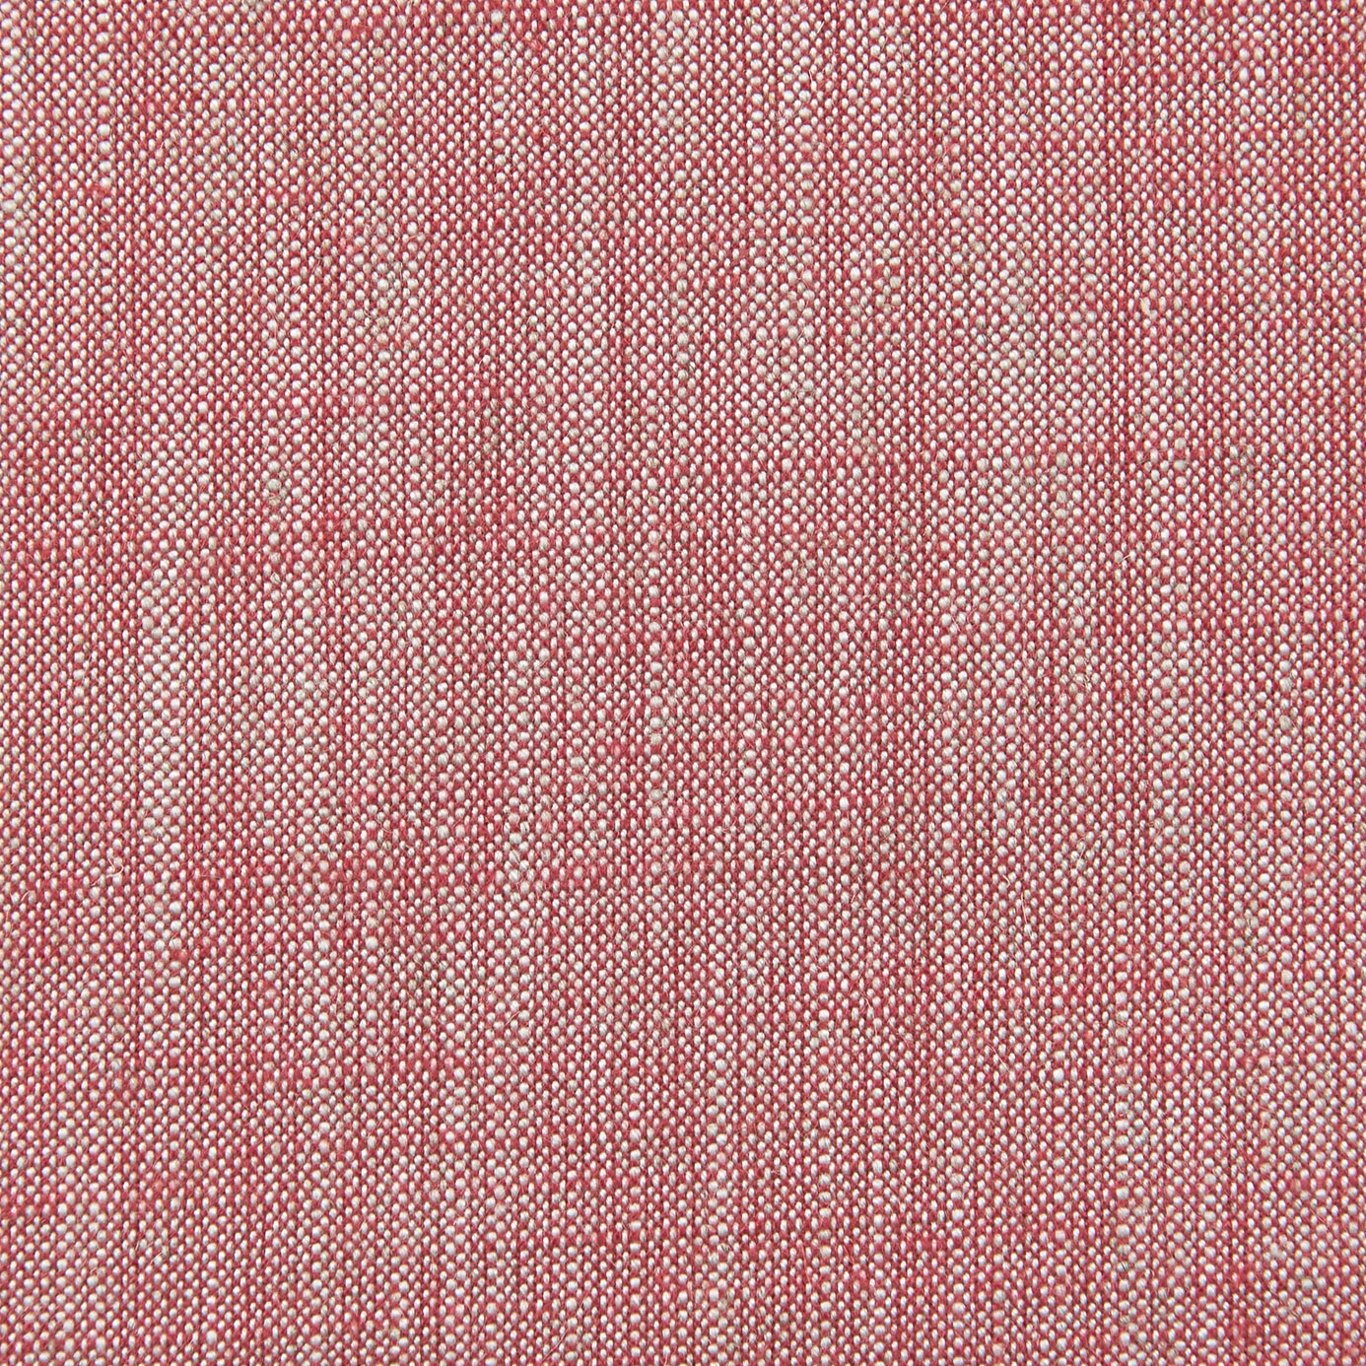 Biarritz Raspberry Fabric by CNC